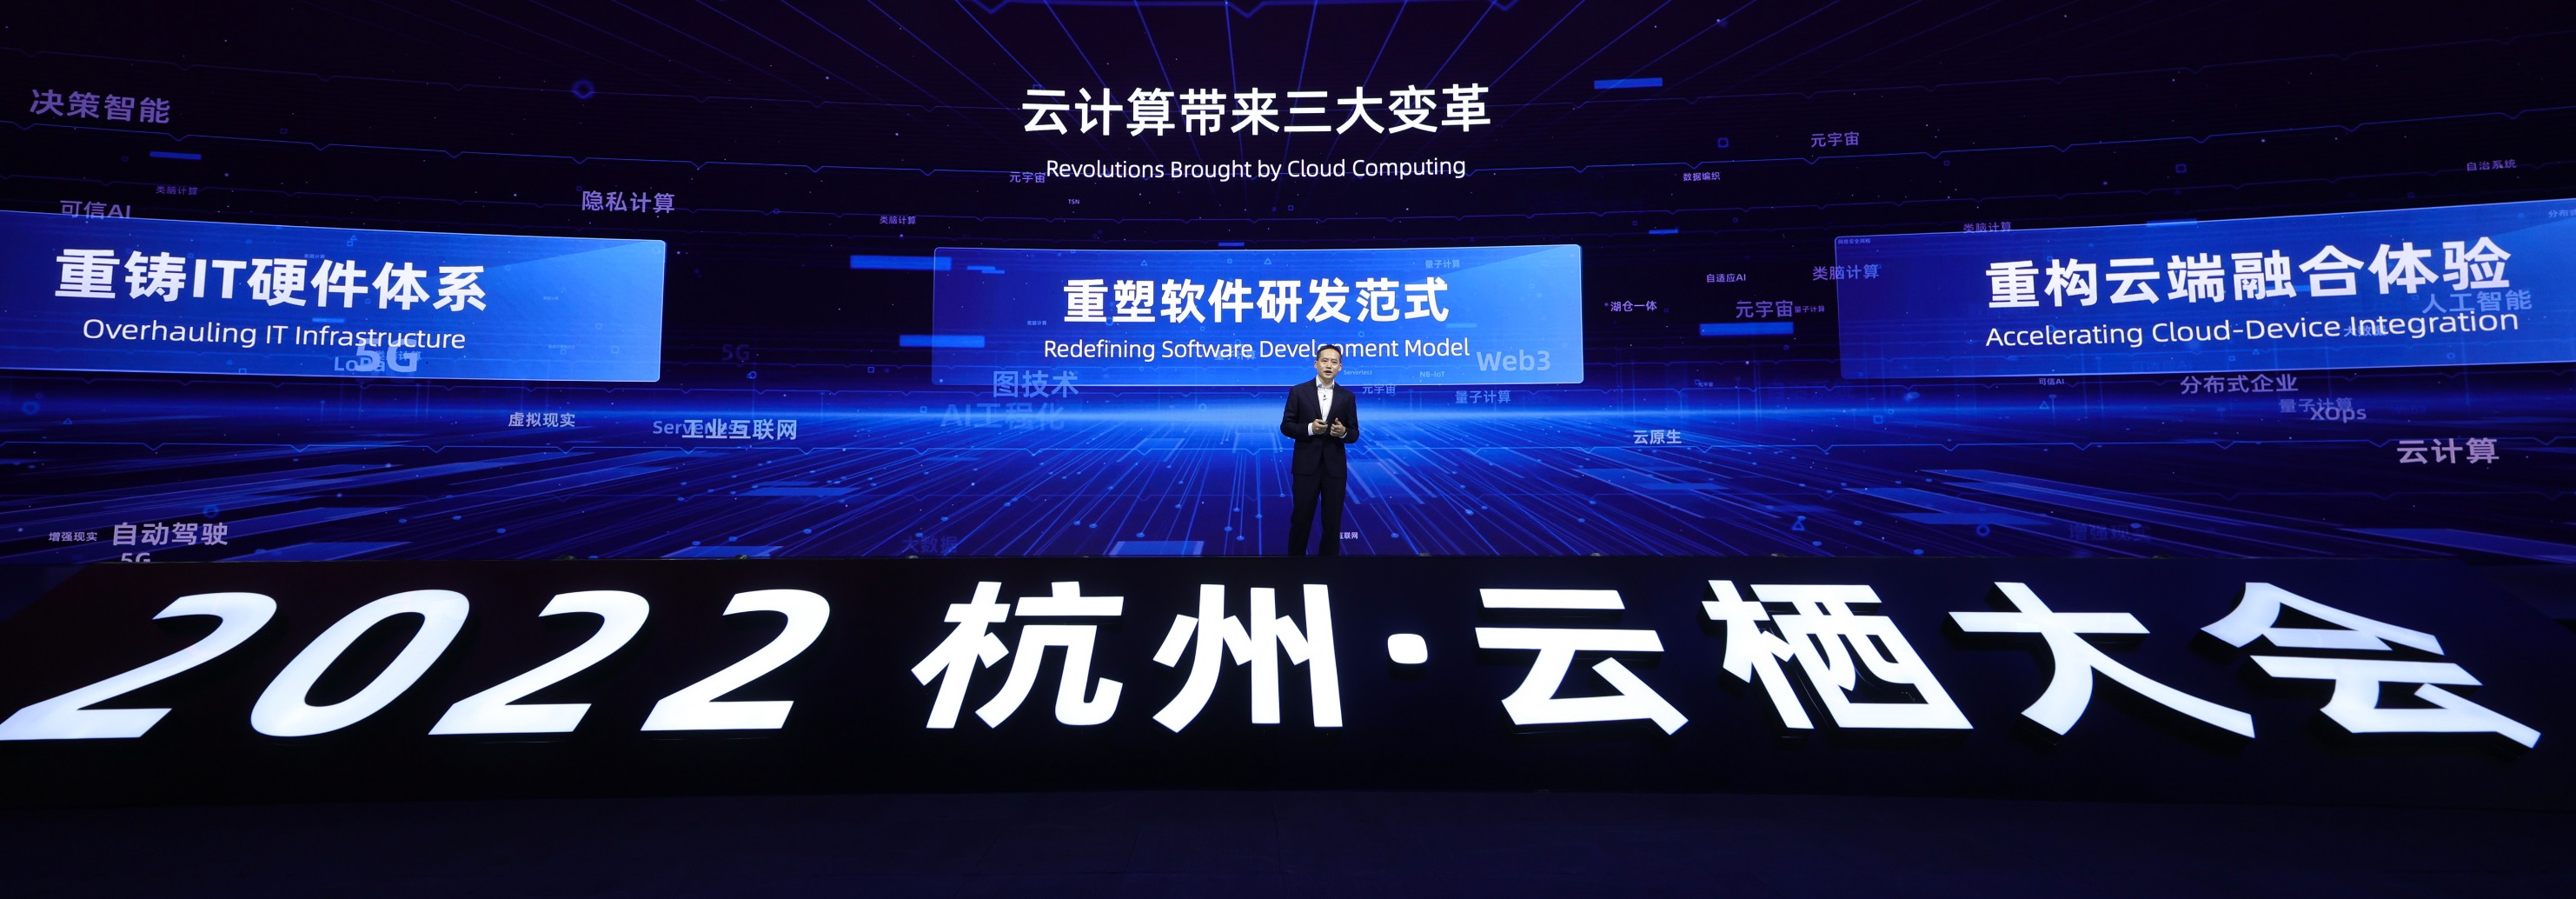 Alibaba Cloud เปิดตัวแพลตฟอร์ม ModelScope และโซลูชันใหม่ๆ เพื่อช่วยลดข้อจำกัดในการสร้างนวัตกรรมให้กับองค์กรธุรกิจ